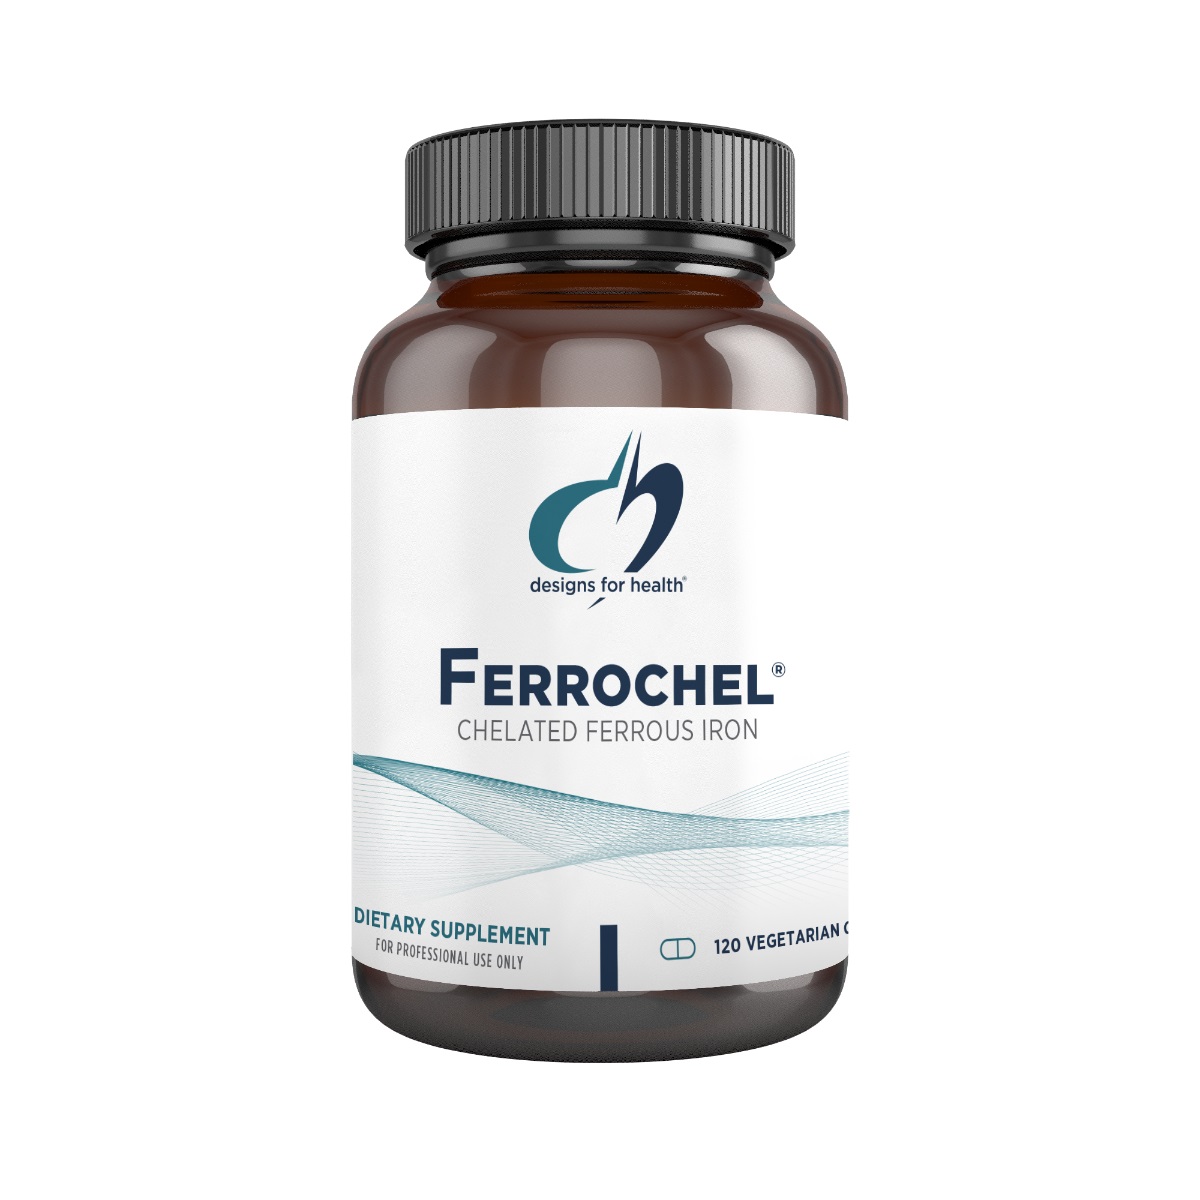 Ferrochel - Designs for Health